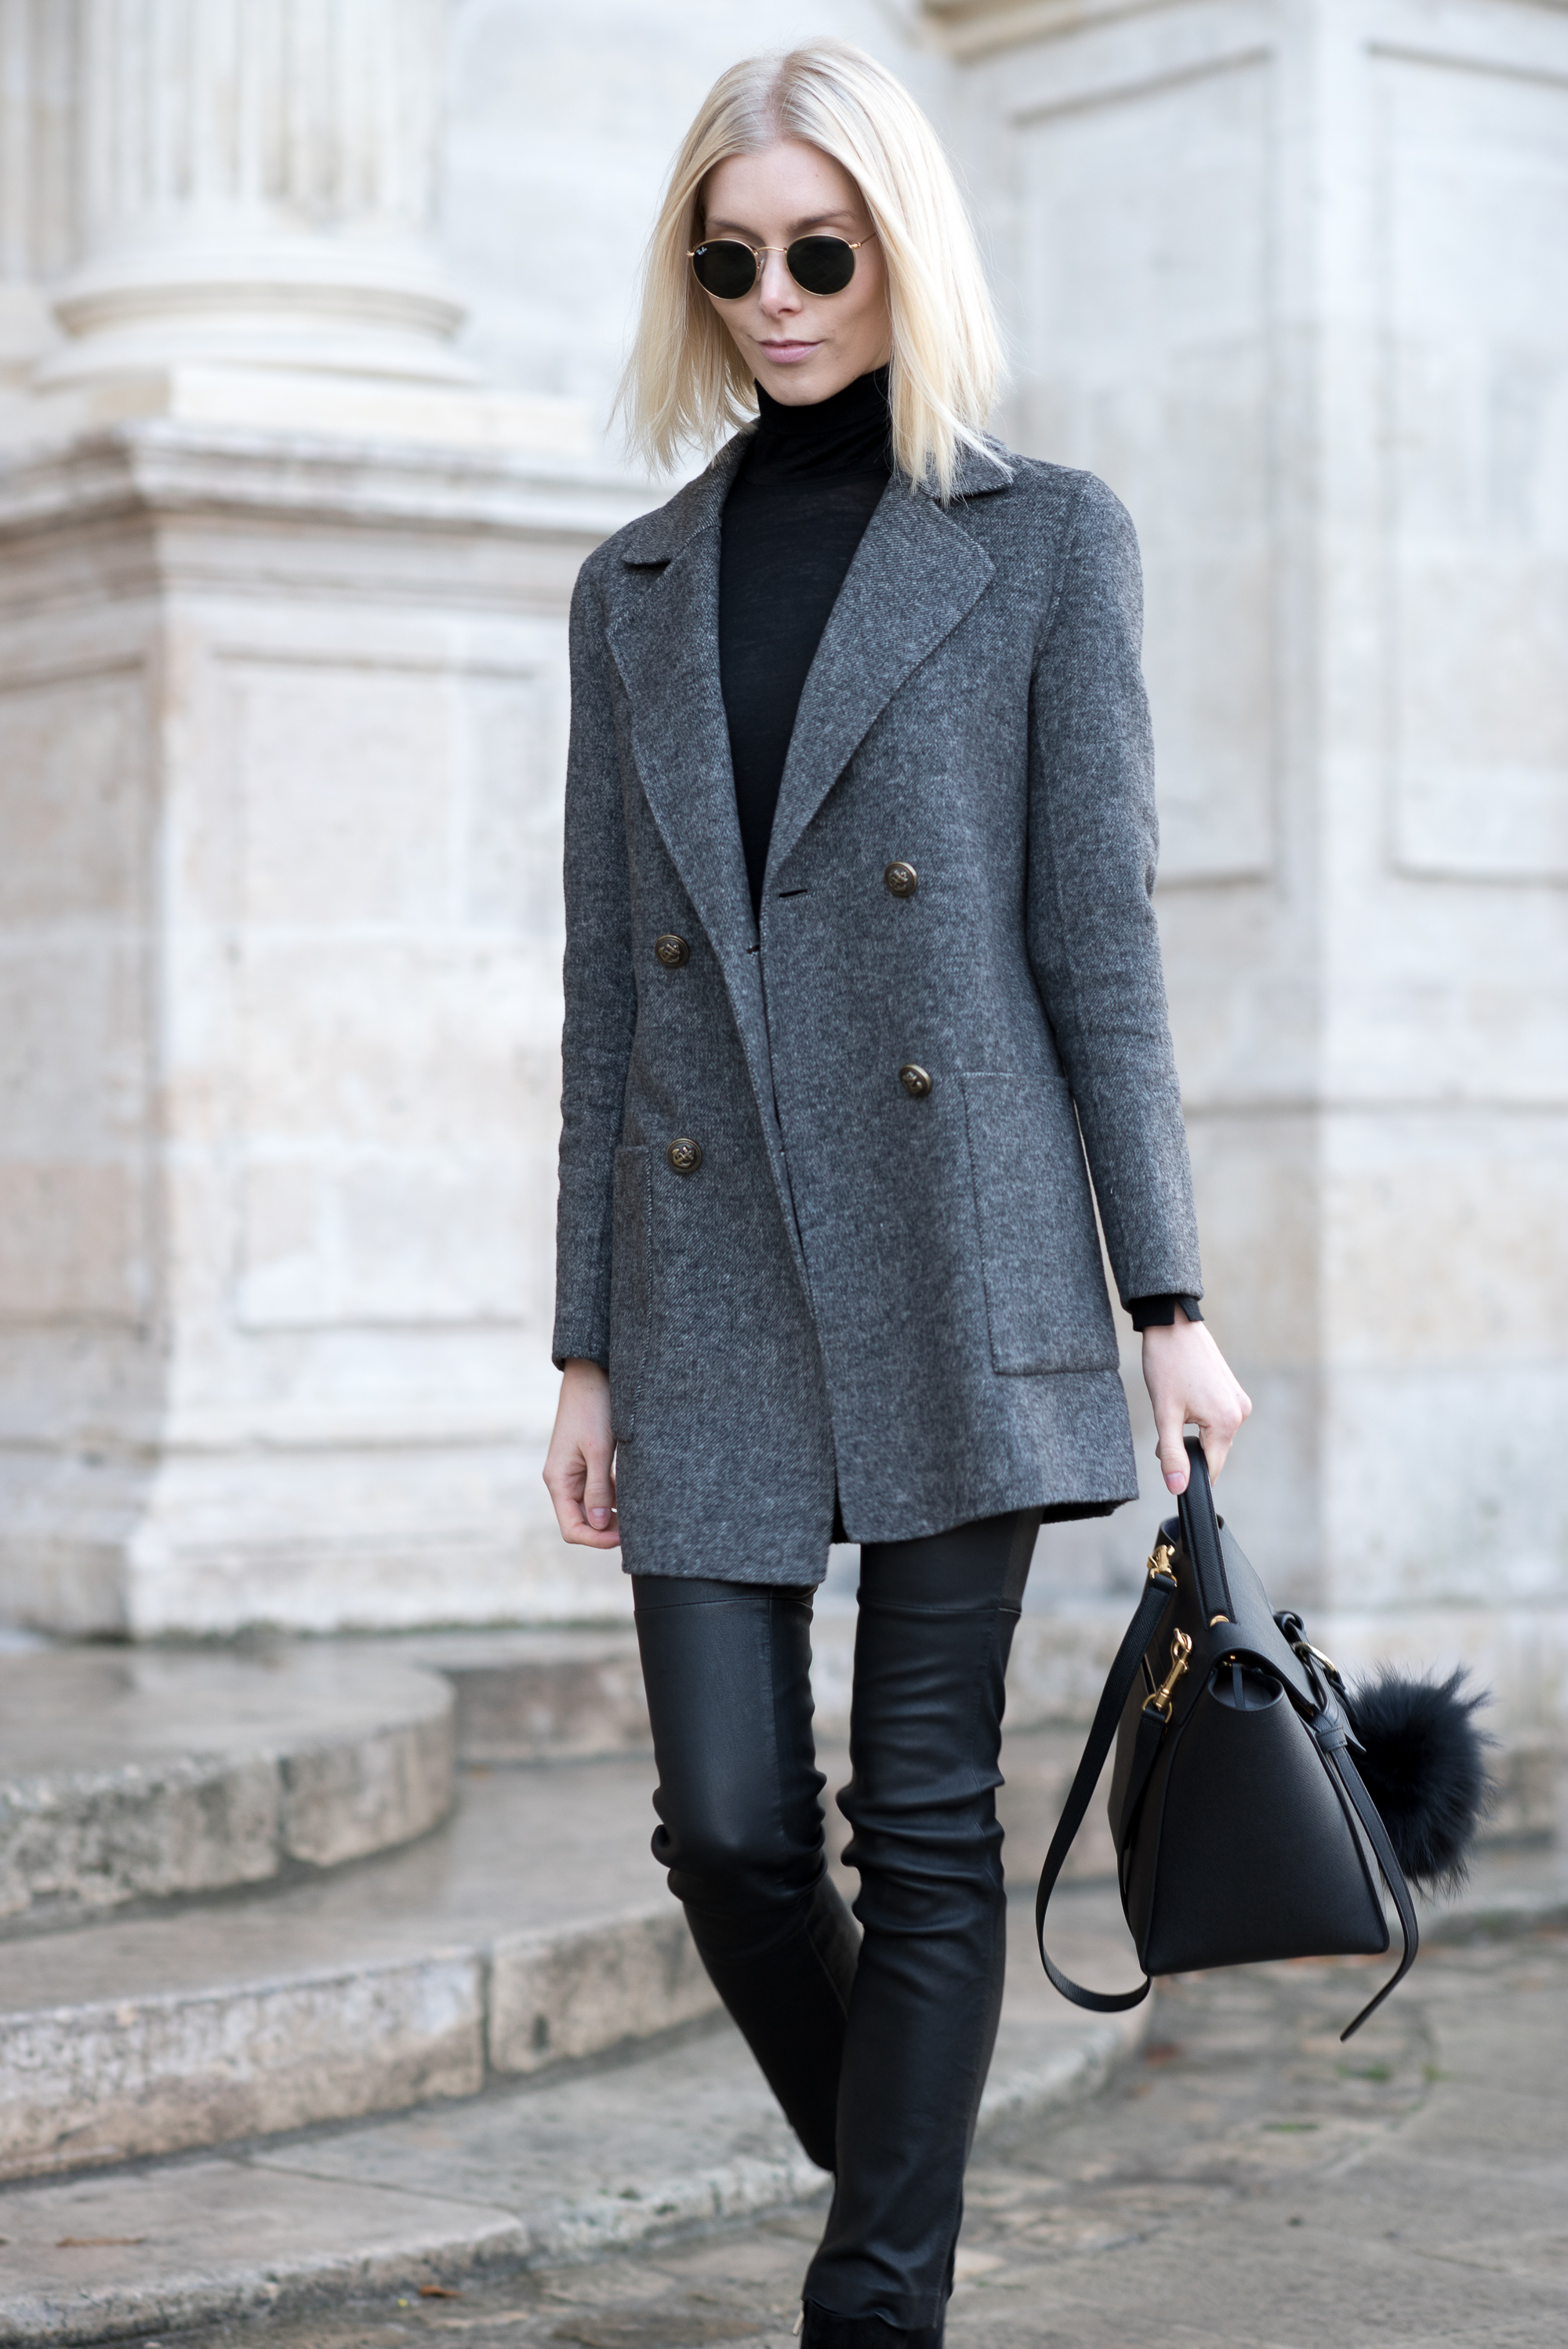 Zara Blazer Outfit Style Plaza 3 1 – STYLE PLAZA